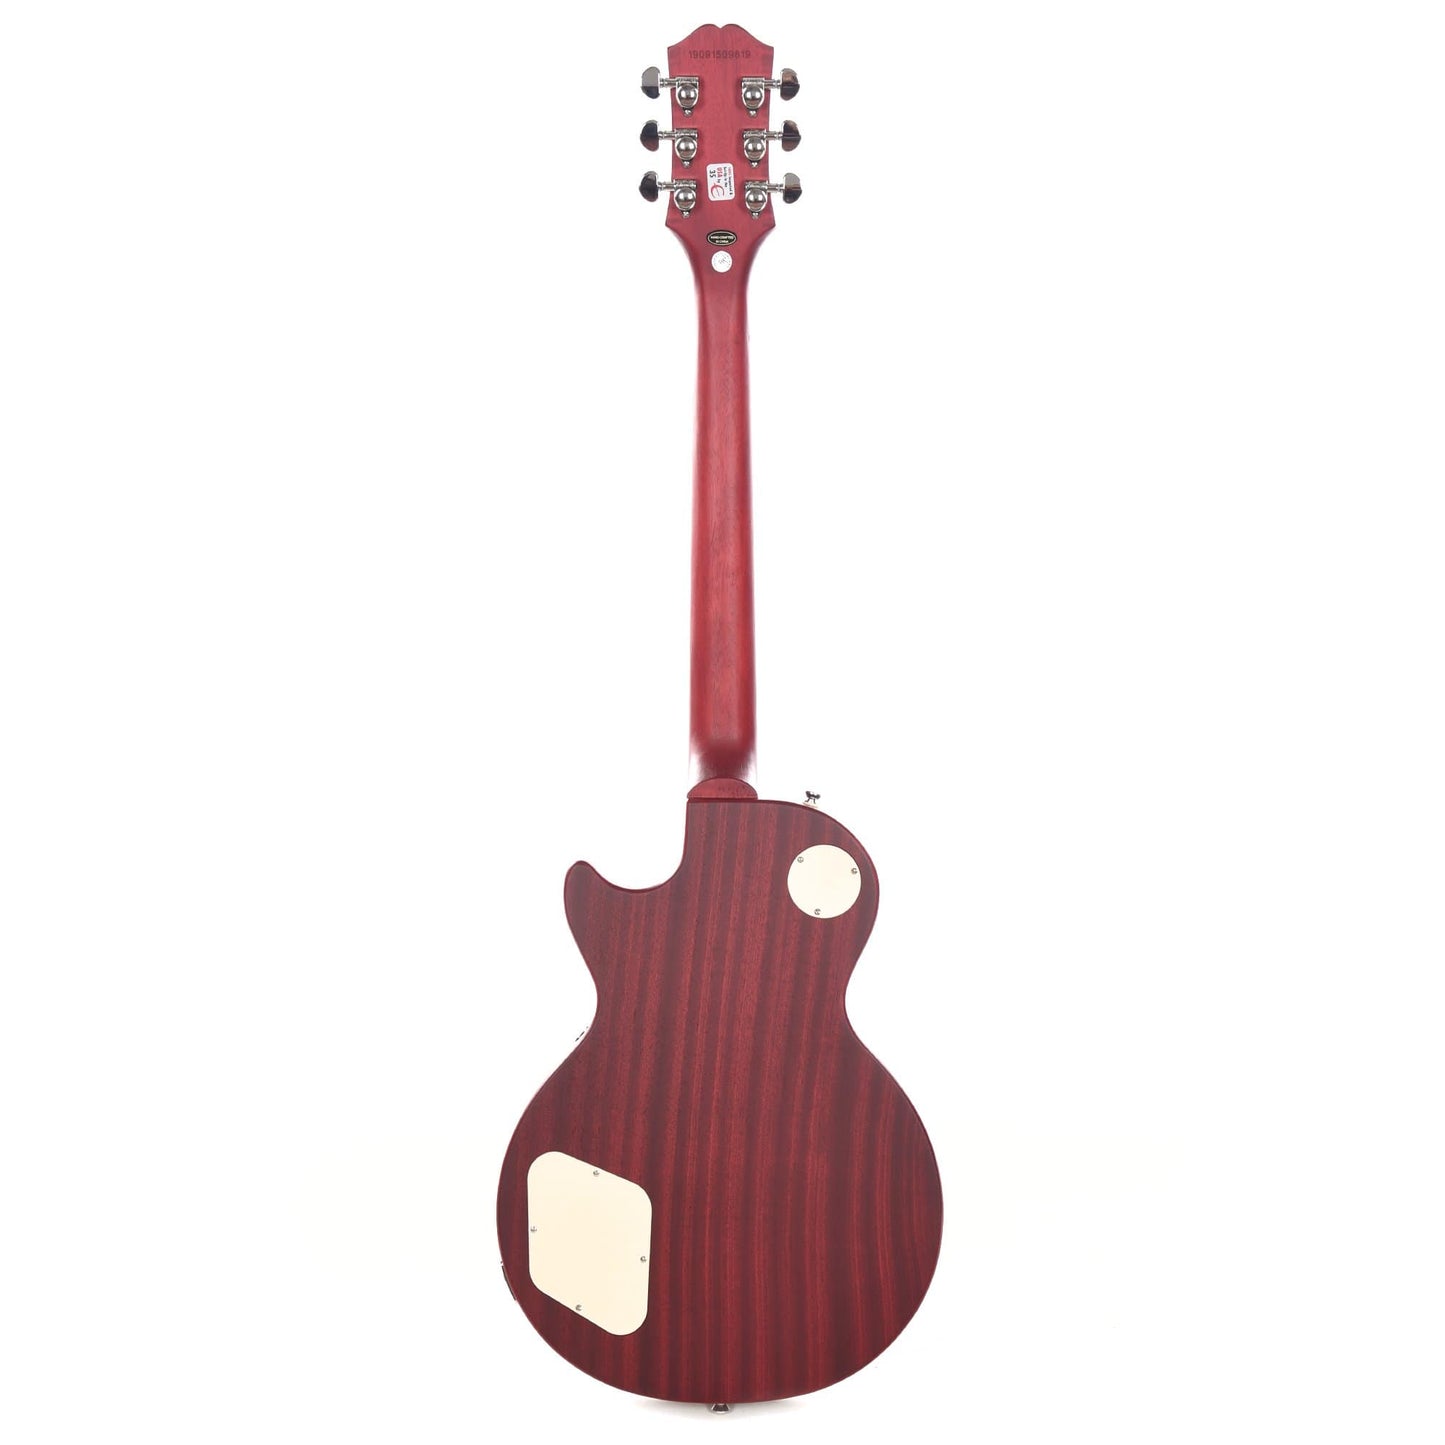 Epiphone Les Paul Classic Worn Worn Heritage Cherry Sunburst Electric Guitars / Solid Body